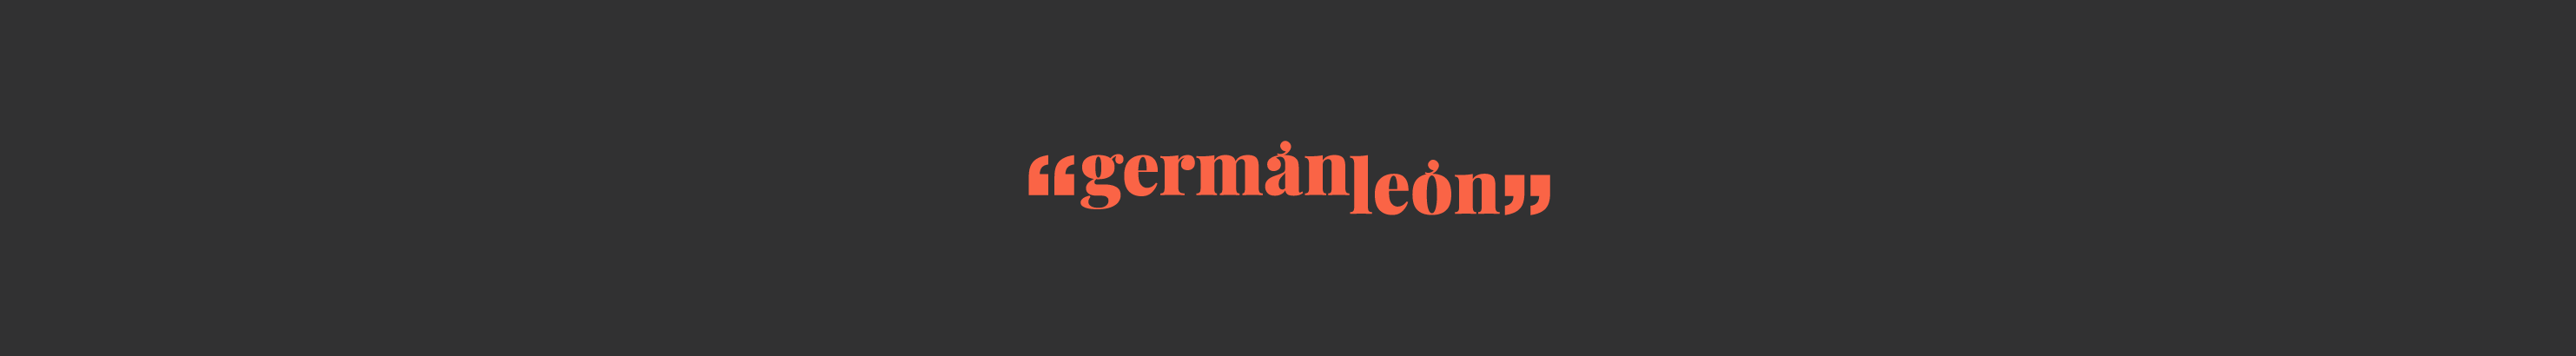 German Leon's profile banner